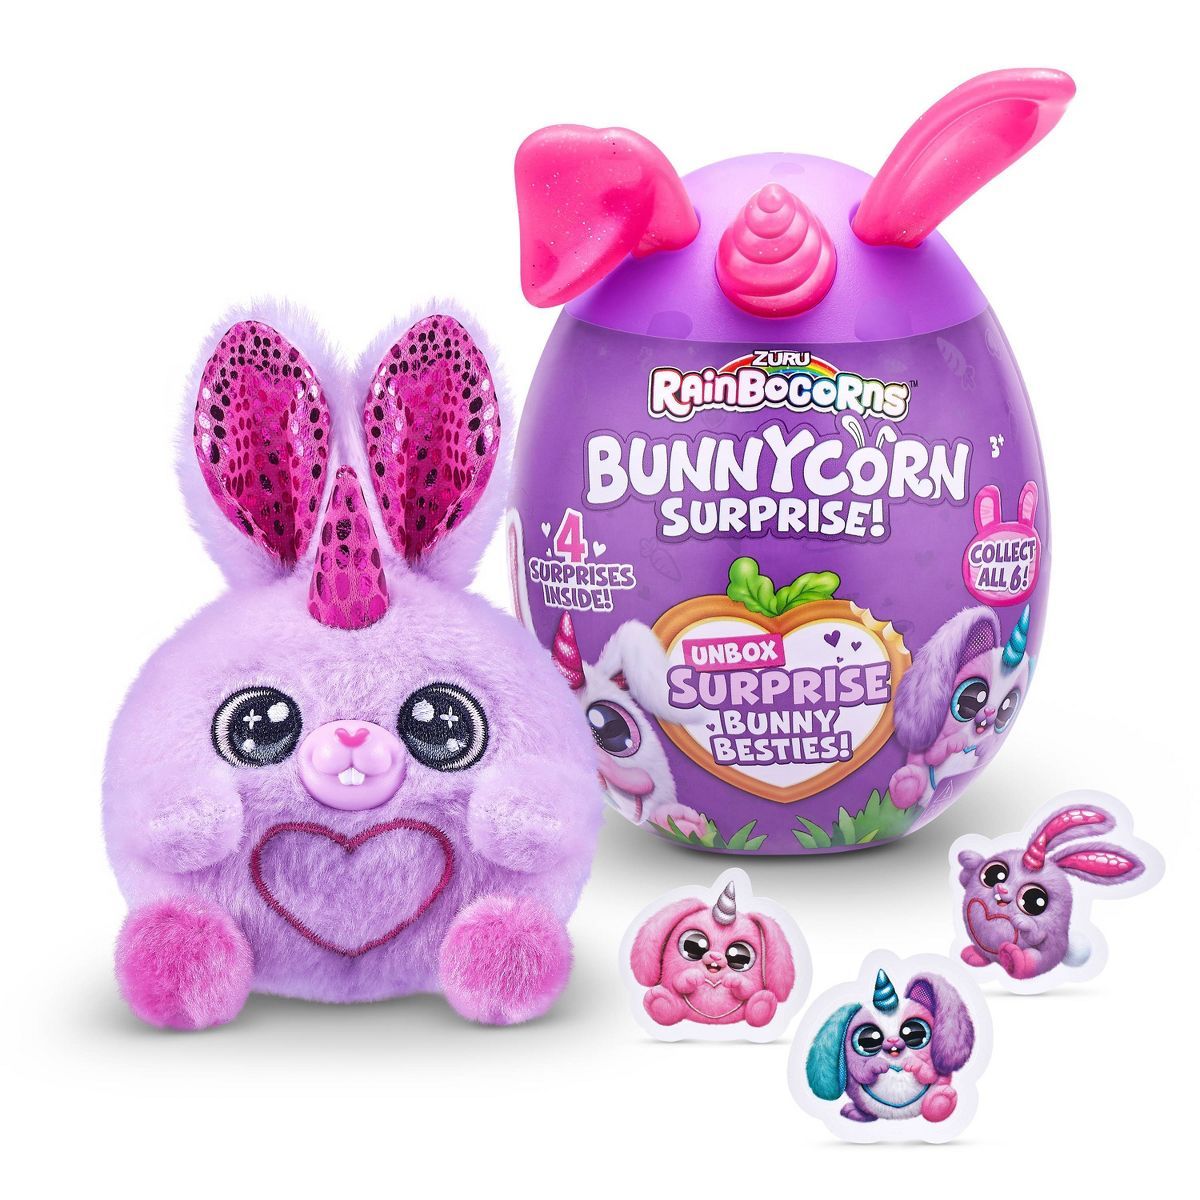 Rainbocorns Bunnycorn Surprise Series 1 Collectible Plush Stuffed Animal by ZURU | Target